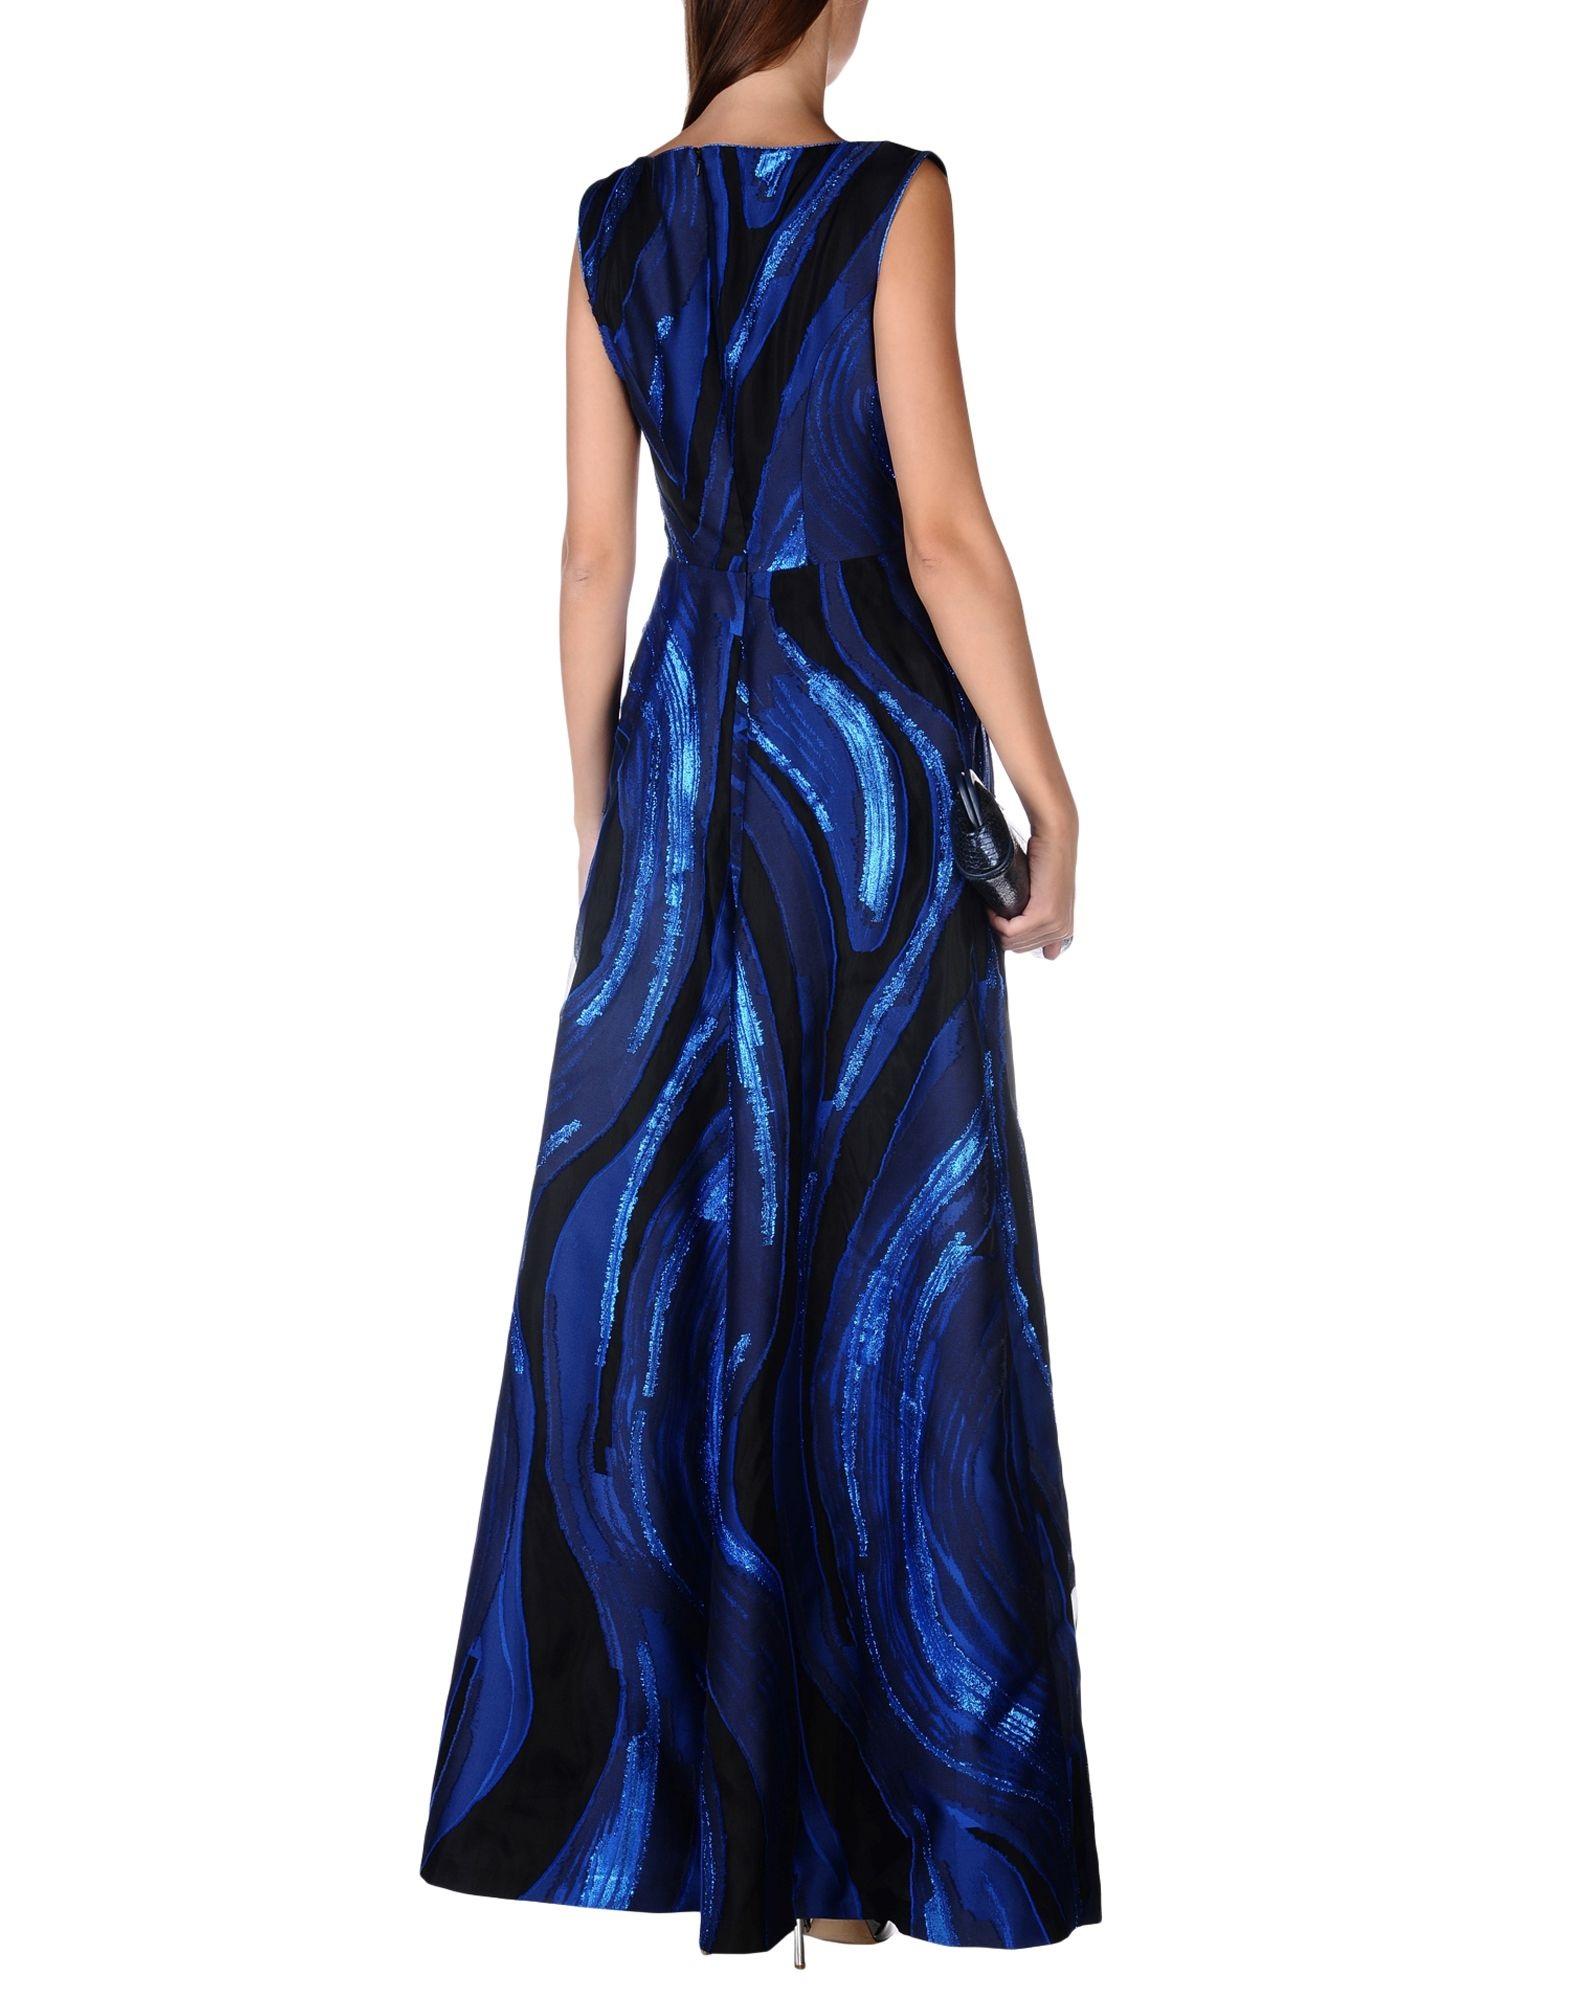 Alberta Ferretti Jacquard Marineblaues langes Metallic-Kleid von Alberta Ferretti It 40 - US 4 (Violett) im Angebot